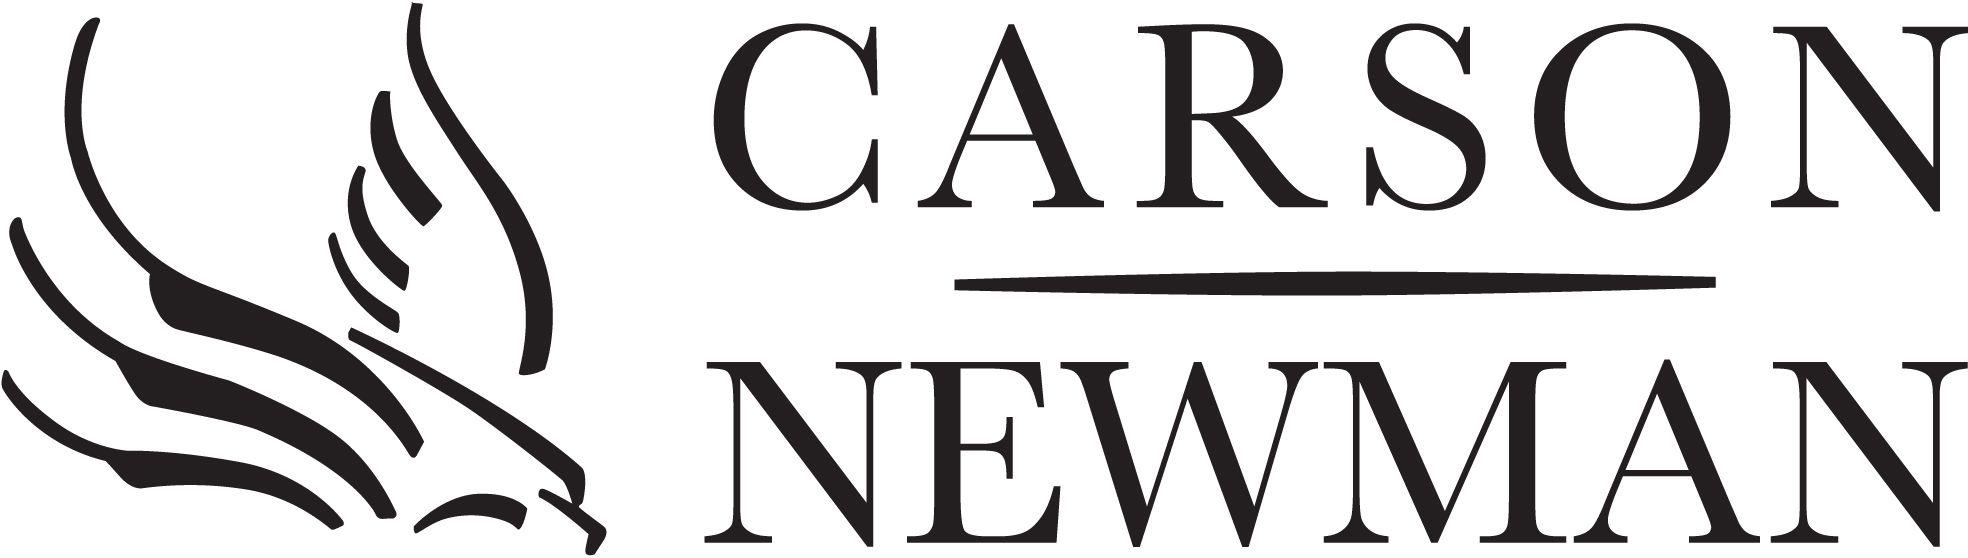 Carson-Newman Logo - The Bonner Network Wiki / Carson-Newman University